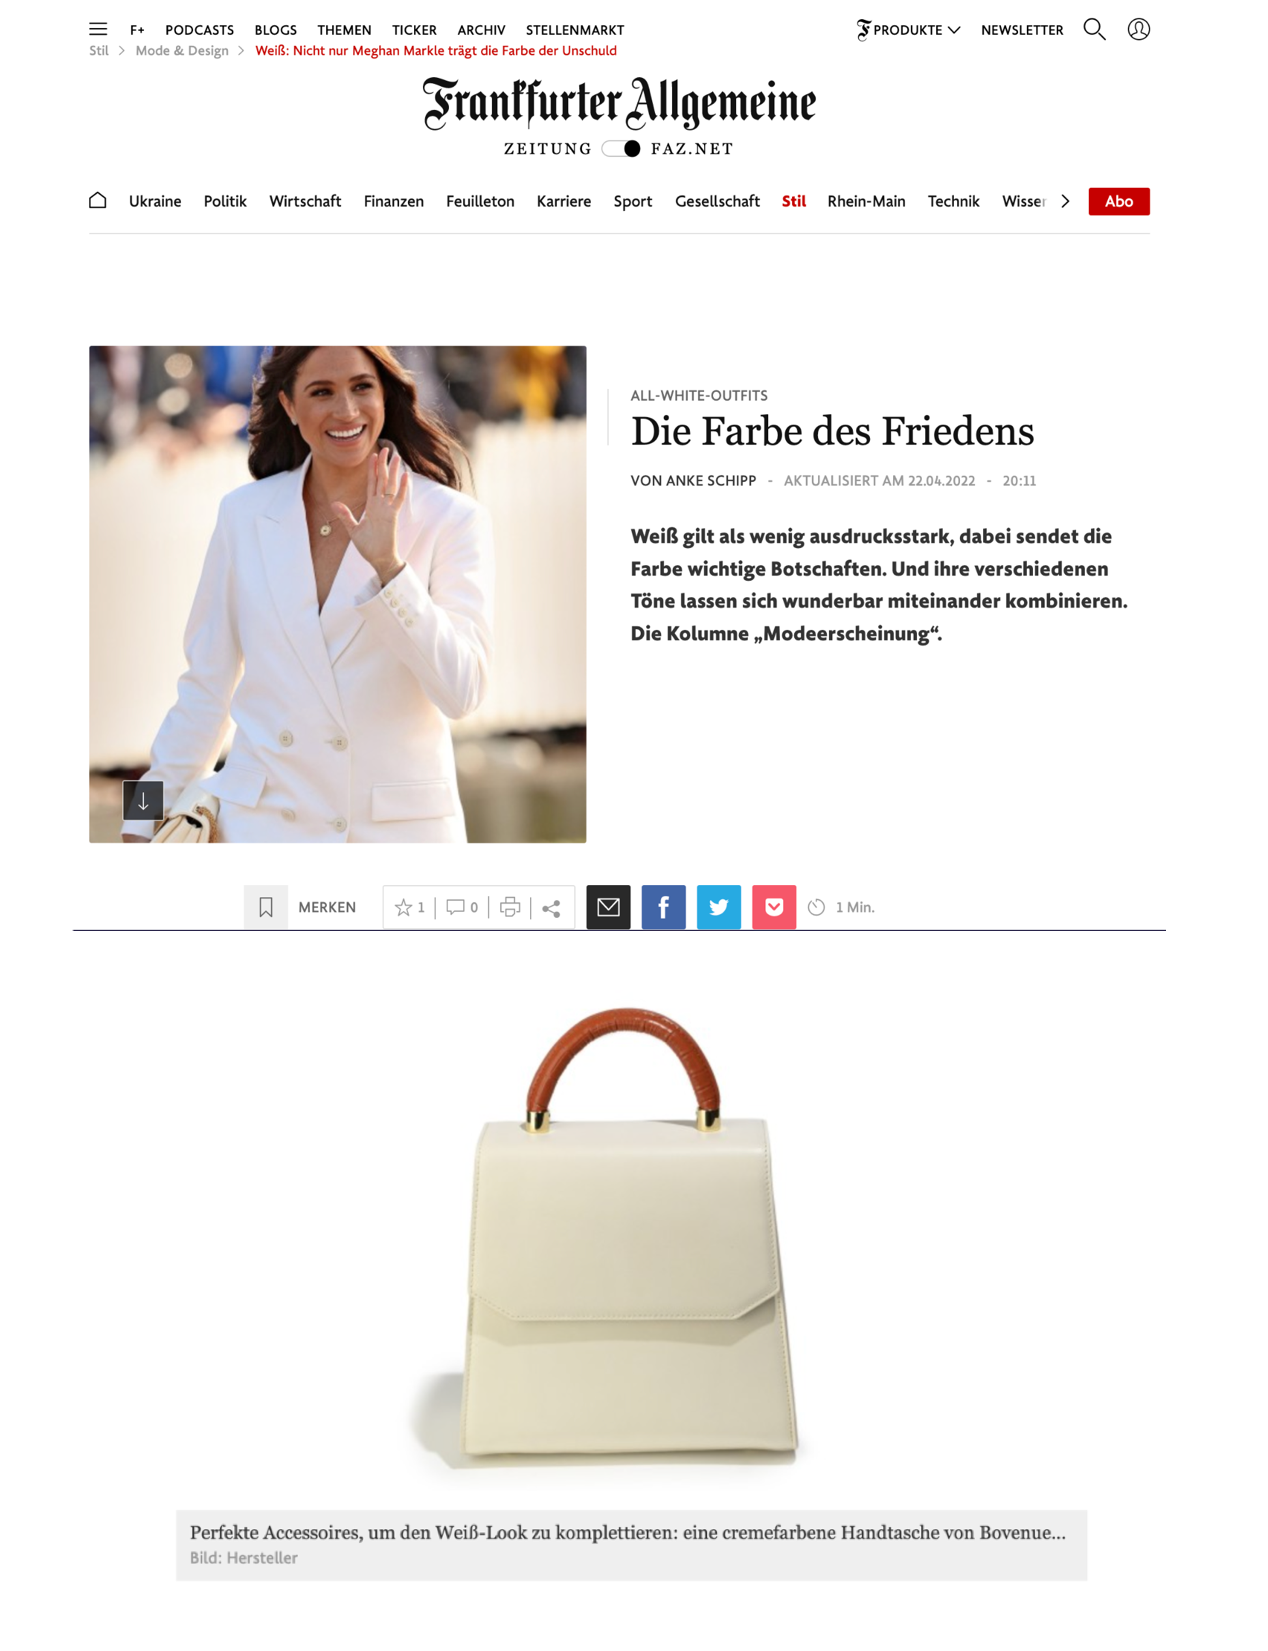 BOVENUE's LAILA in Powder White featured in the Frankfurter Allgemine!